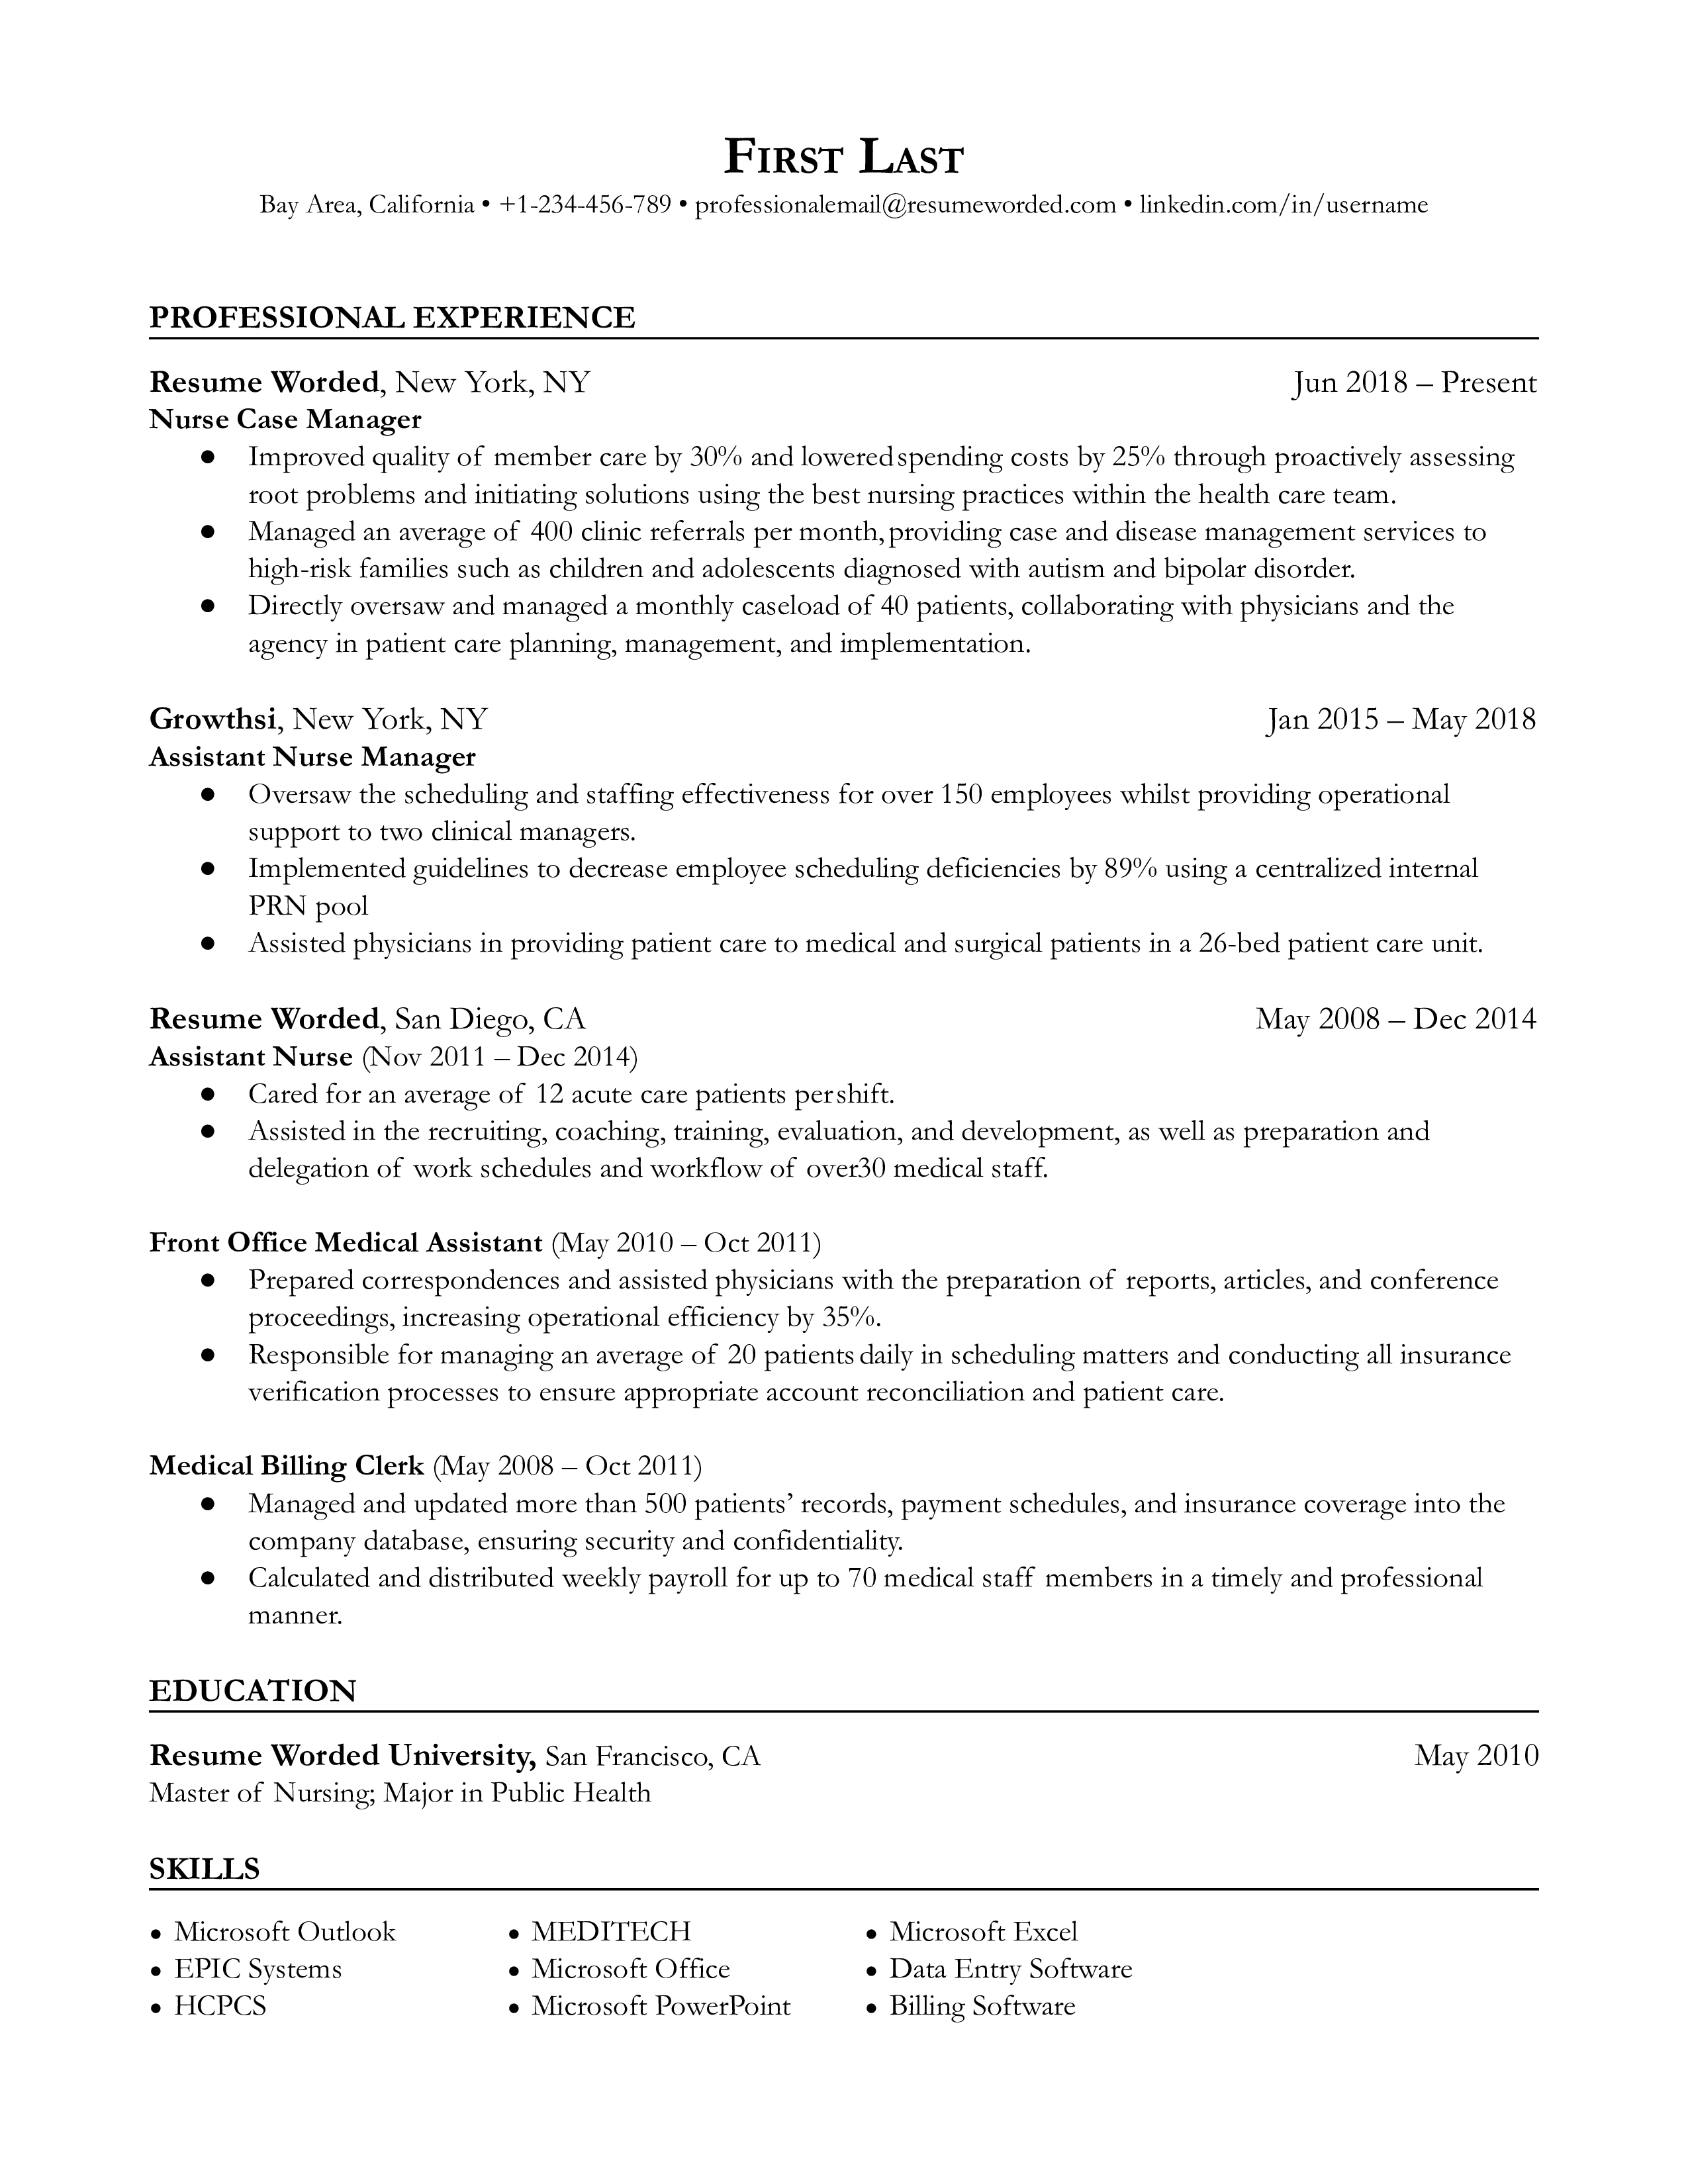 A screenshot of a CV for a Nurse Case Manager role.